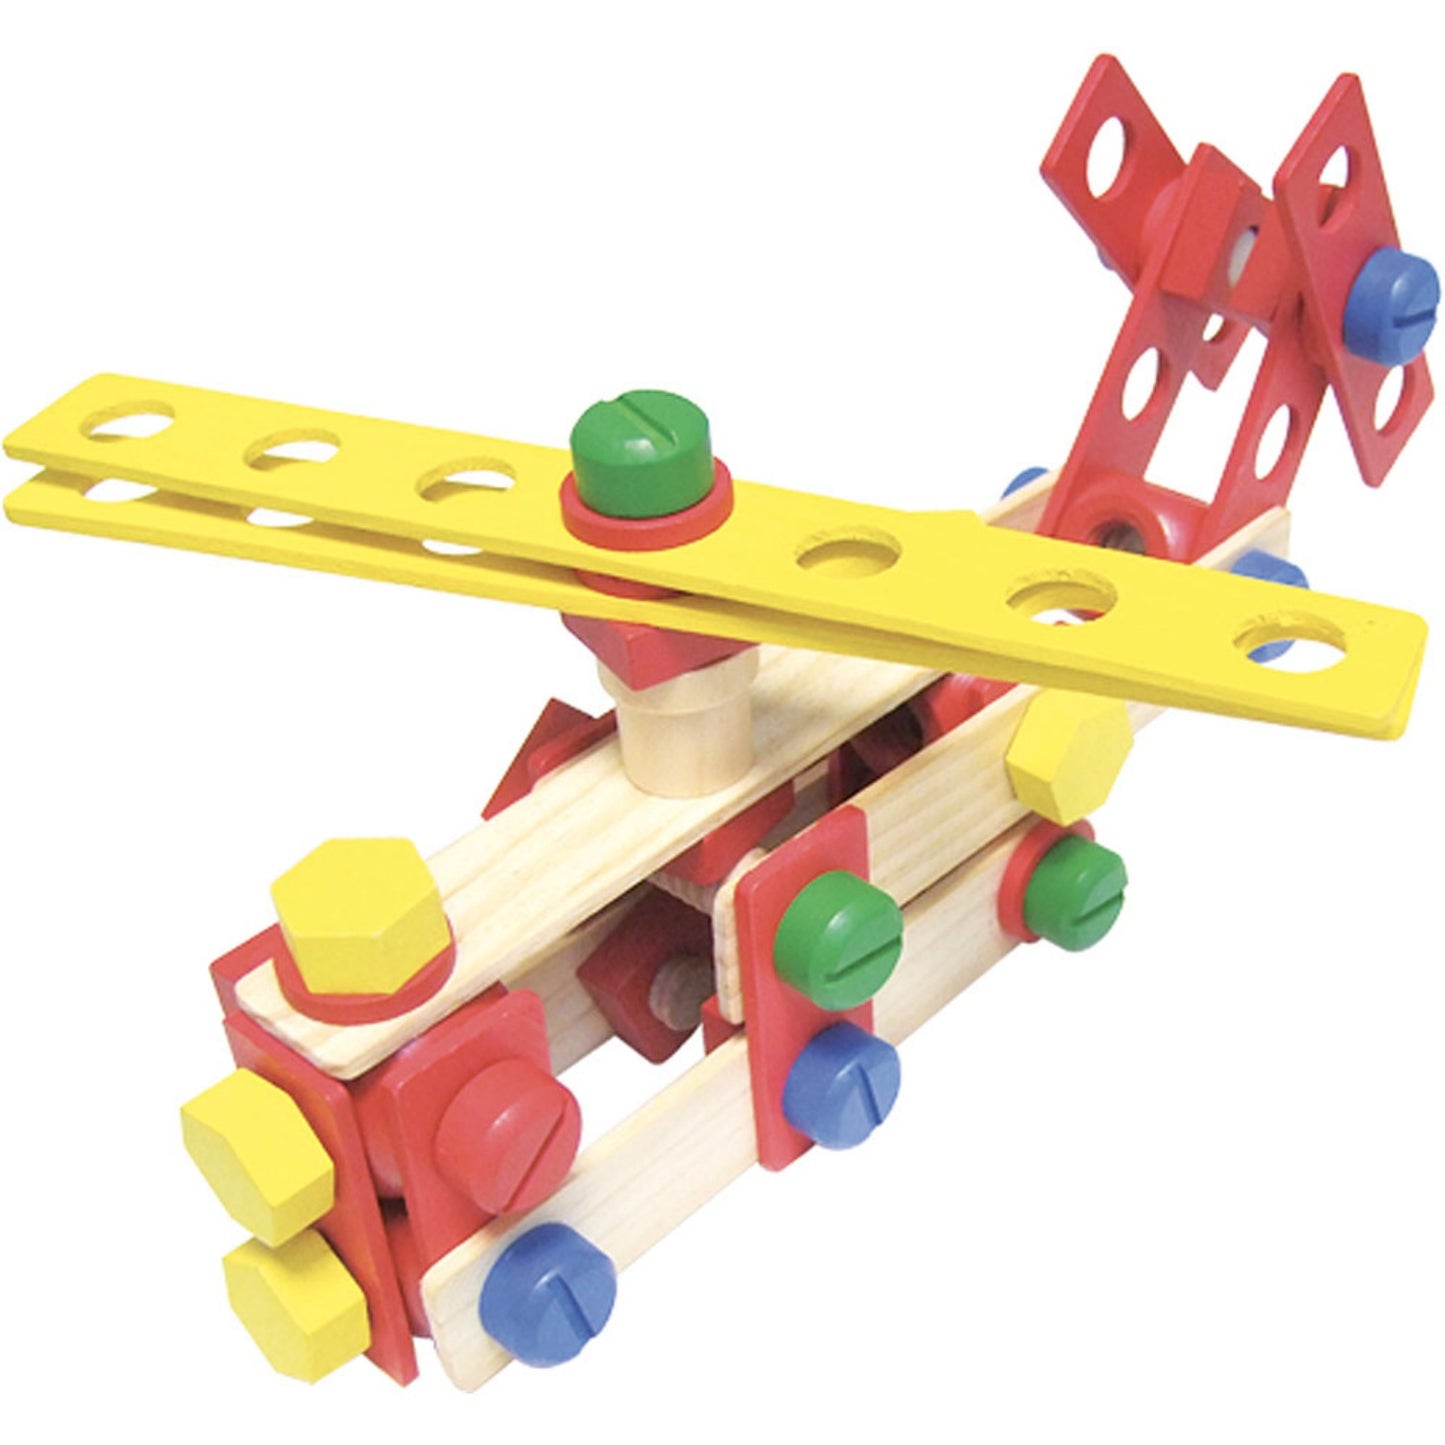 Vilac Wooden Construction Building Set ‘Batibloc’ | Educational Wooden Toy | Helicopter | BeoVERDE.ie